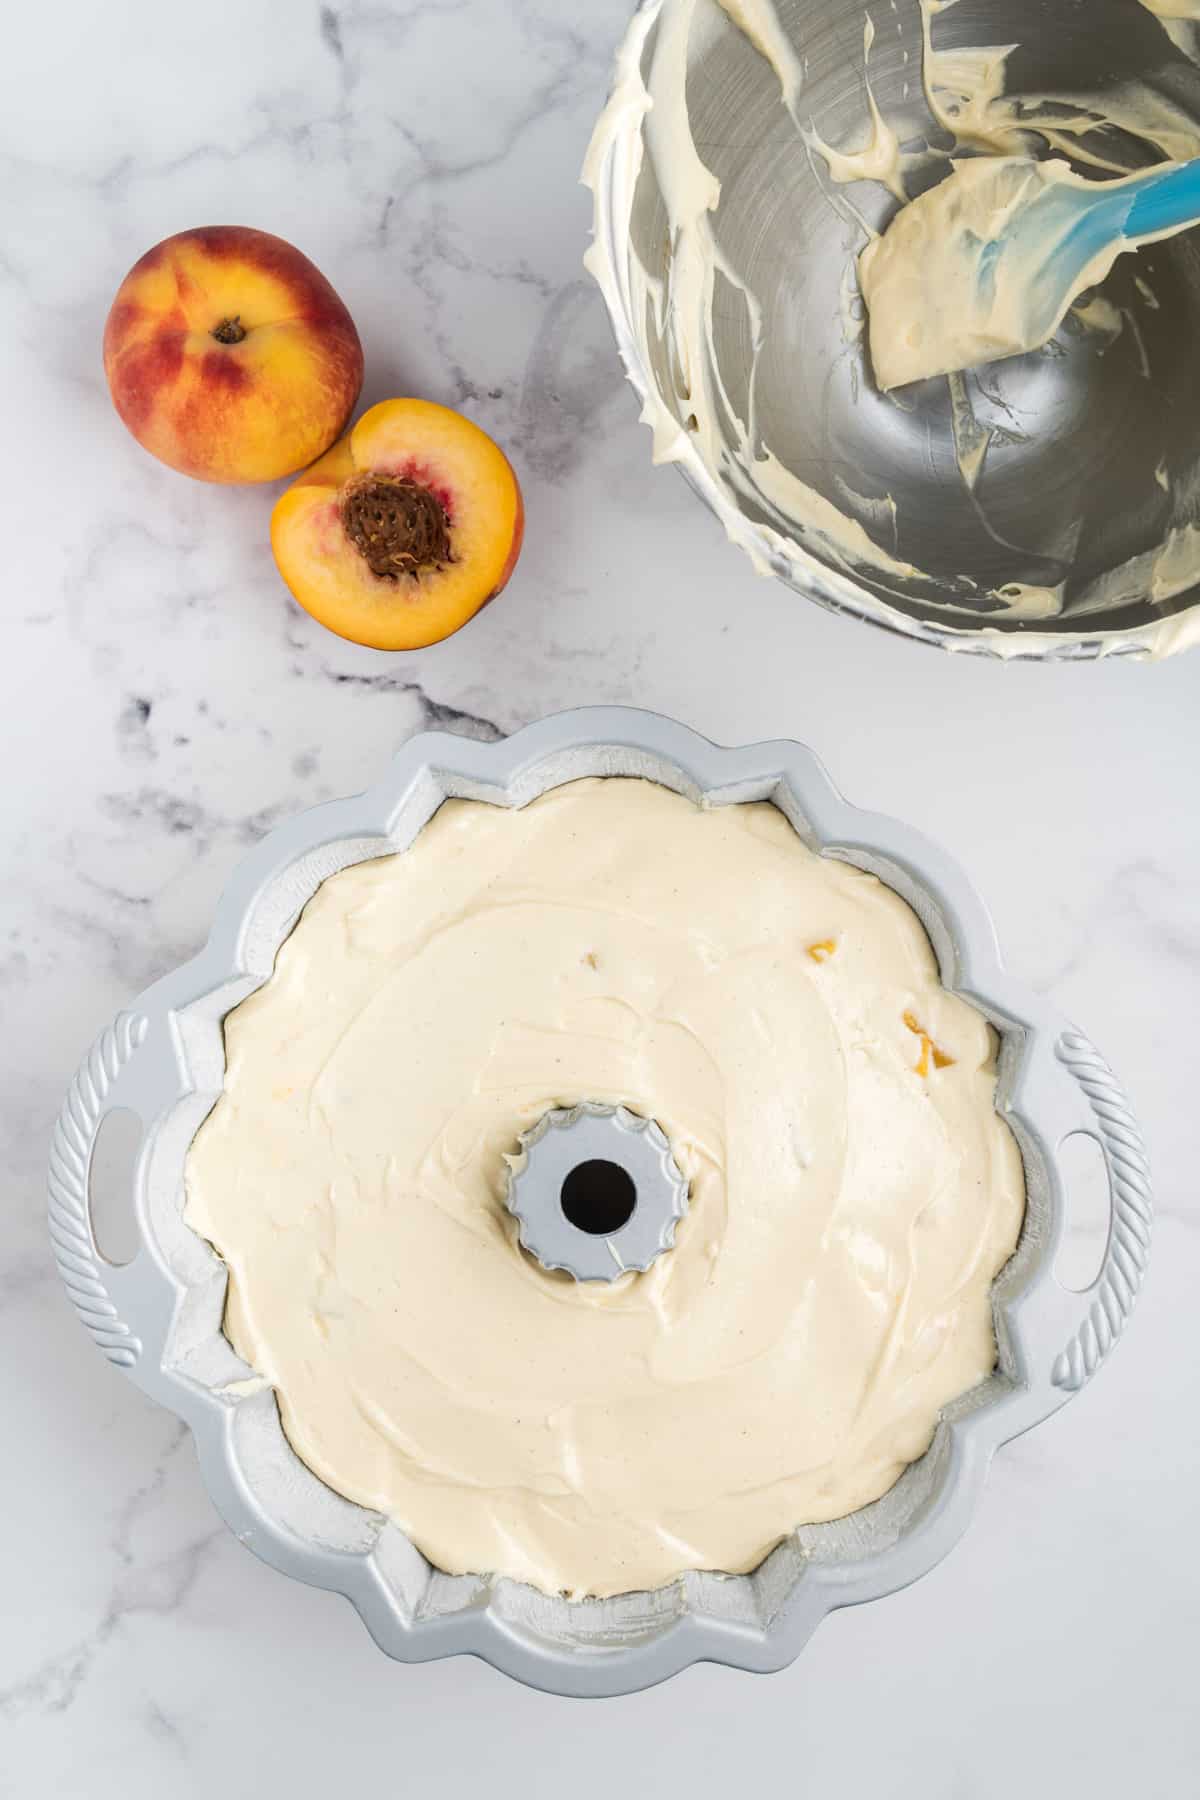 Peach cobbler pound cake batter in a bundt pan.